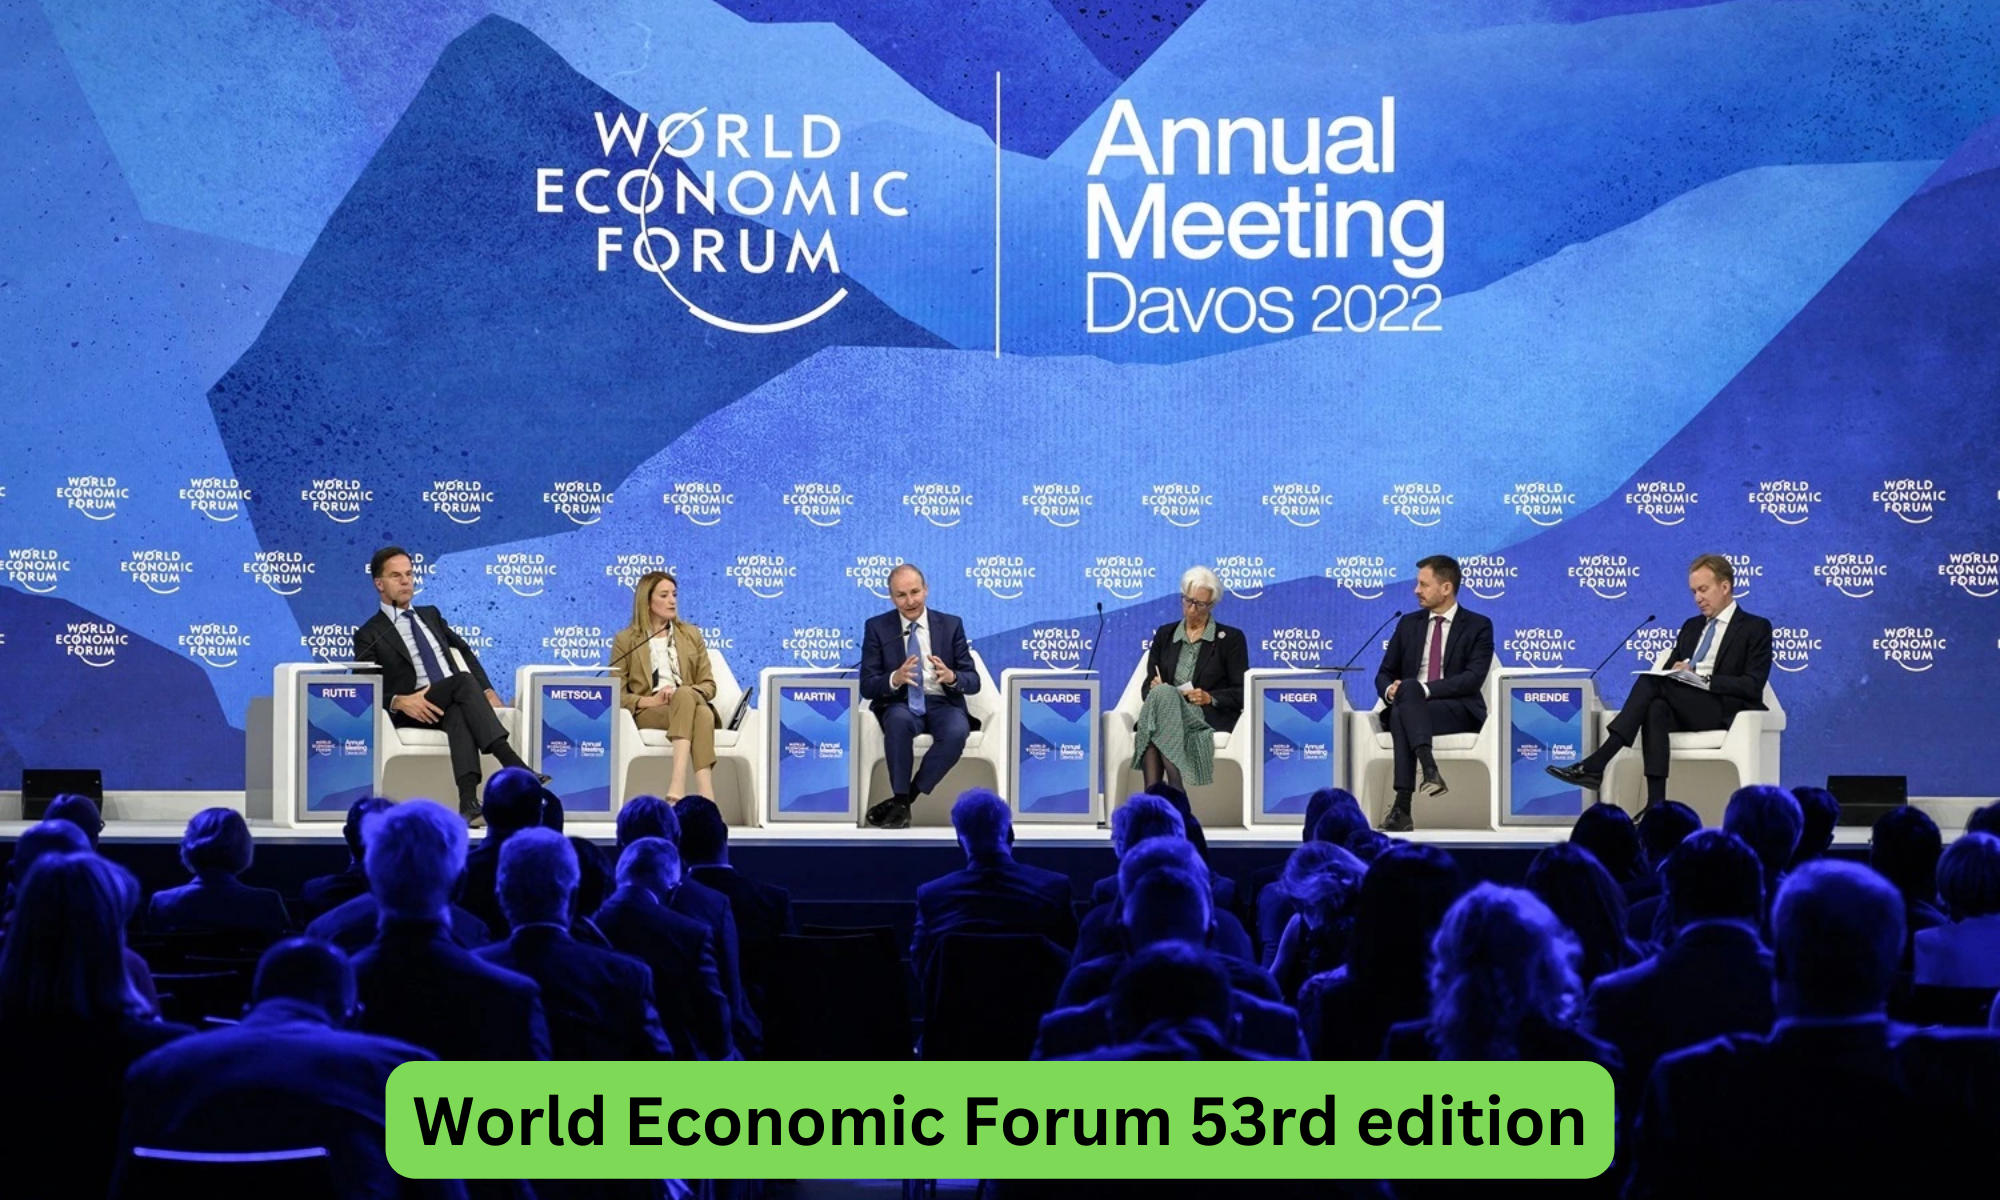 World Economic Forum 53rd edition